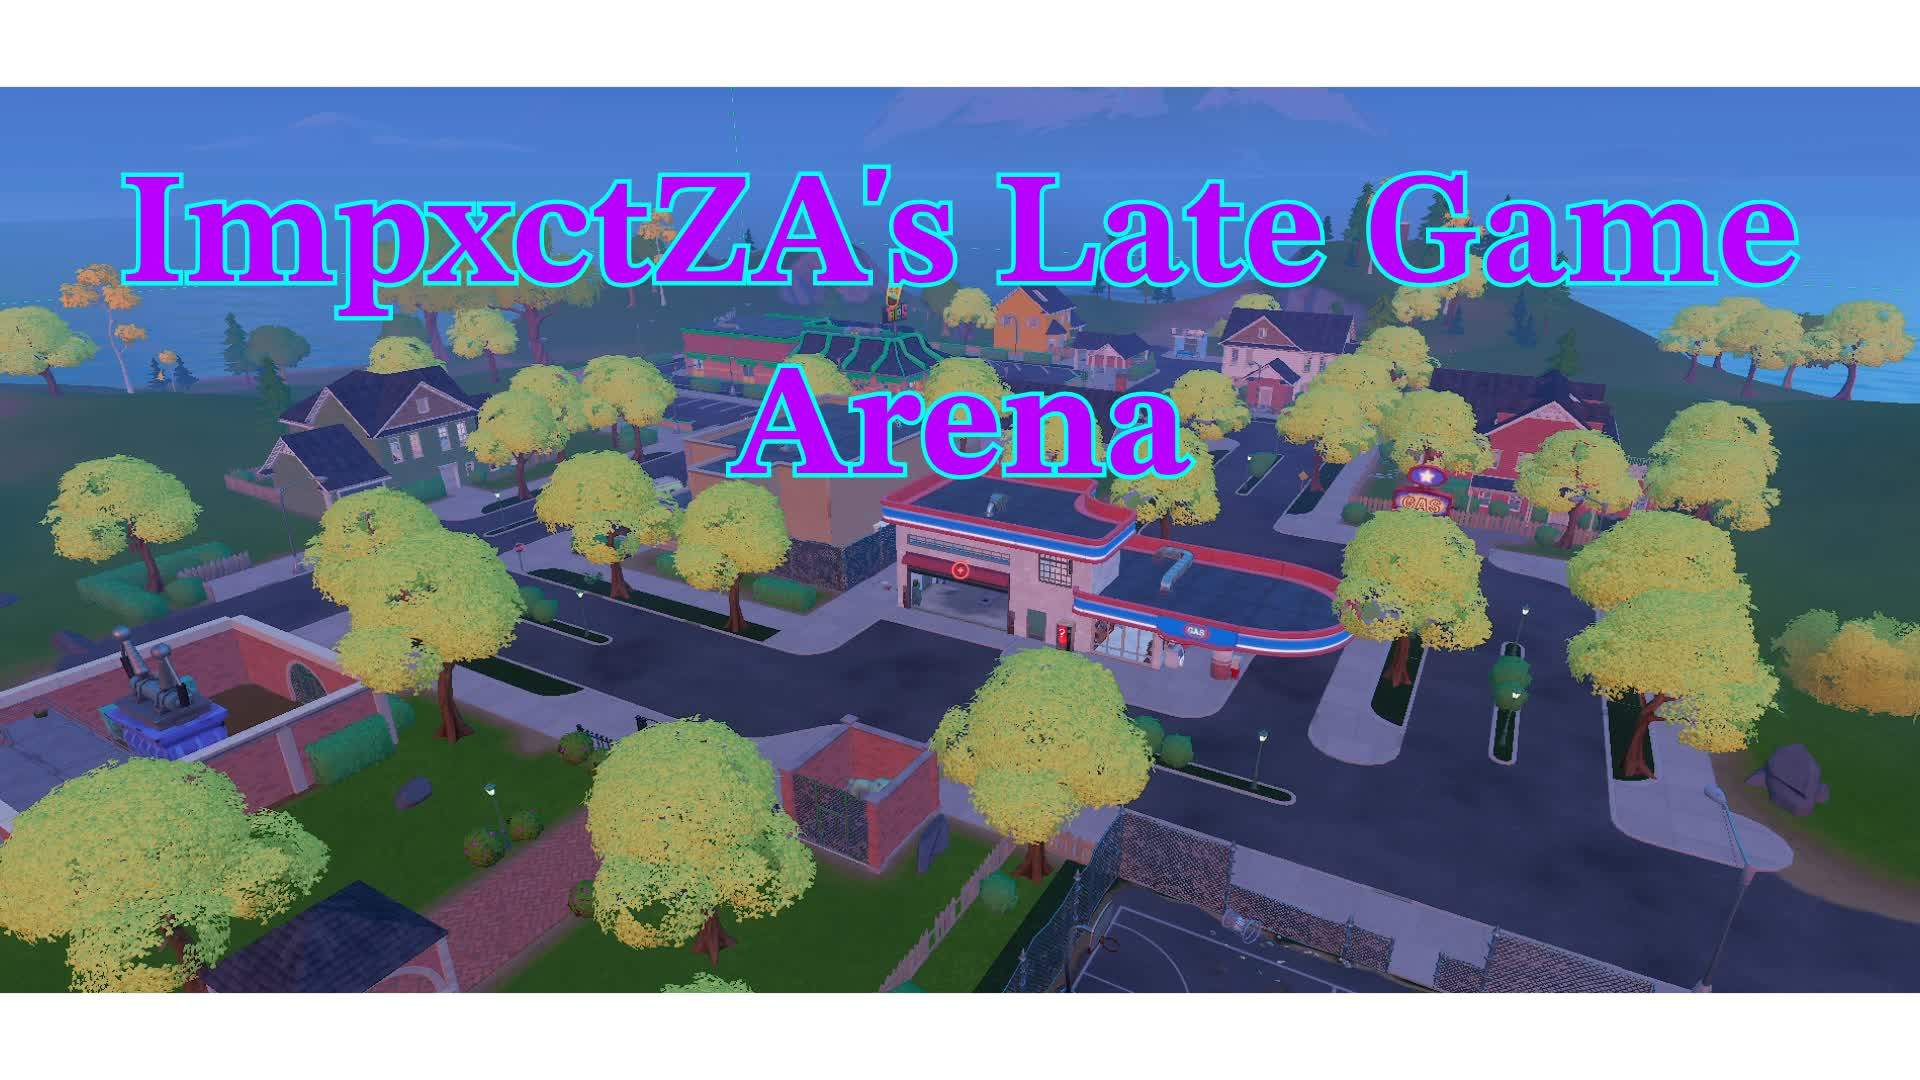 ImpxctZA's Late Game Arena